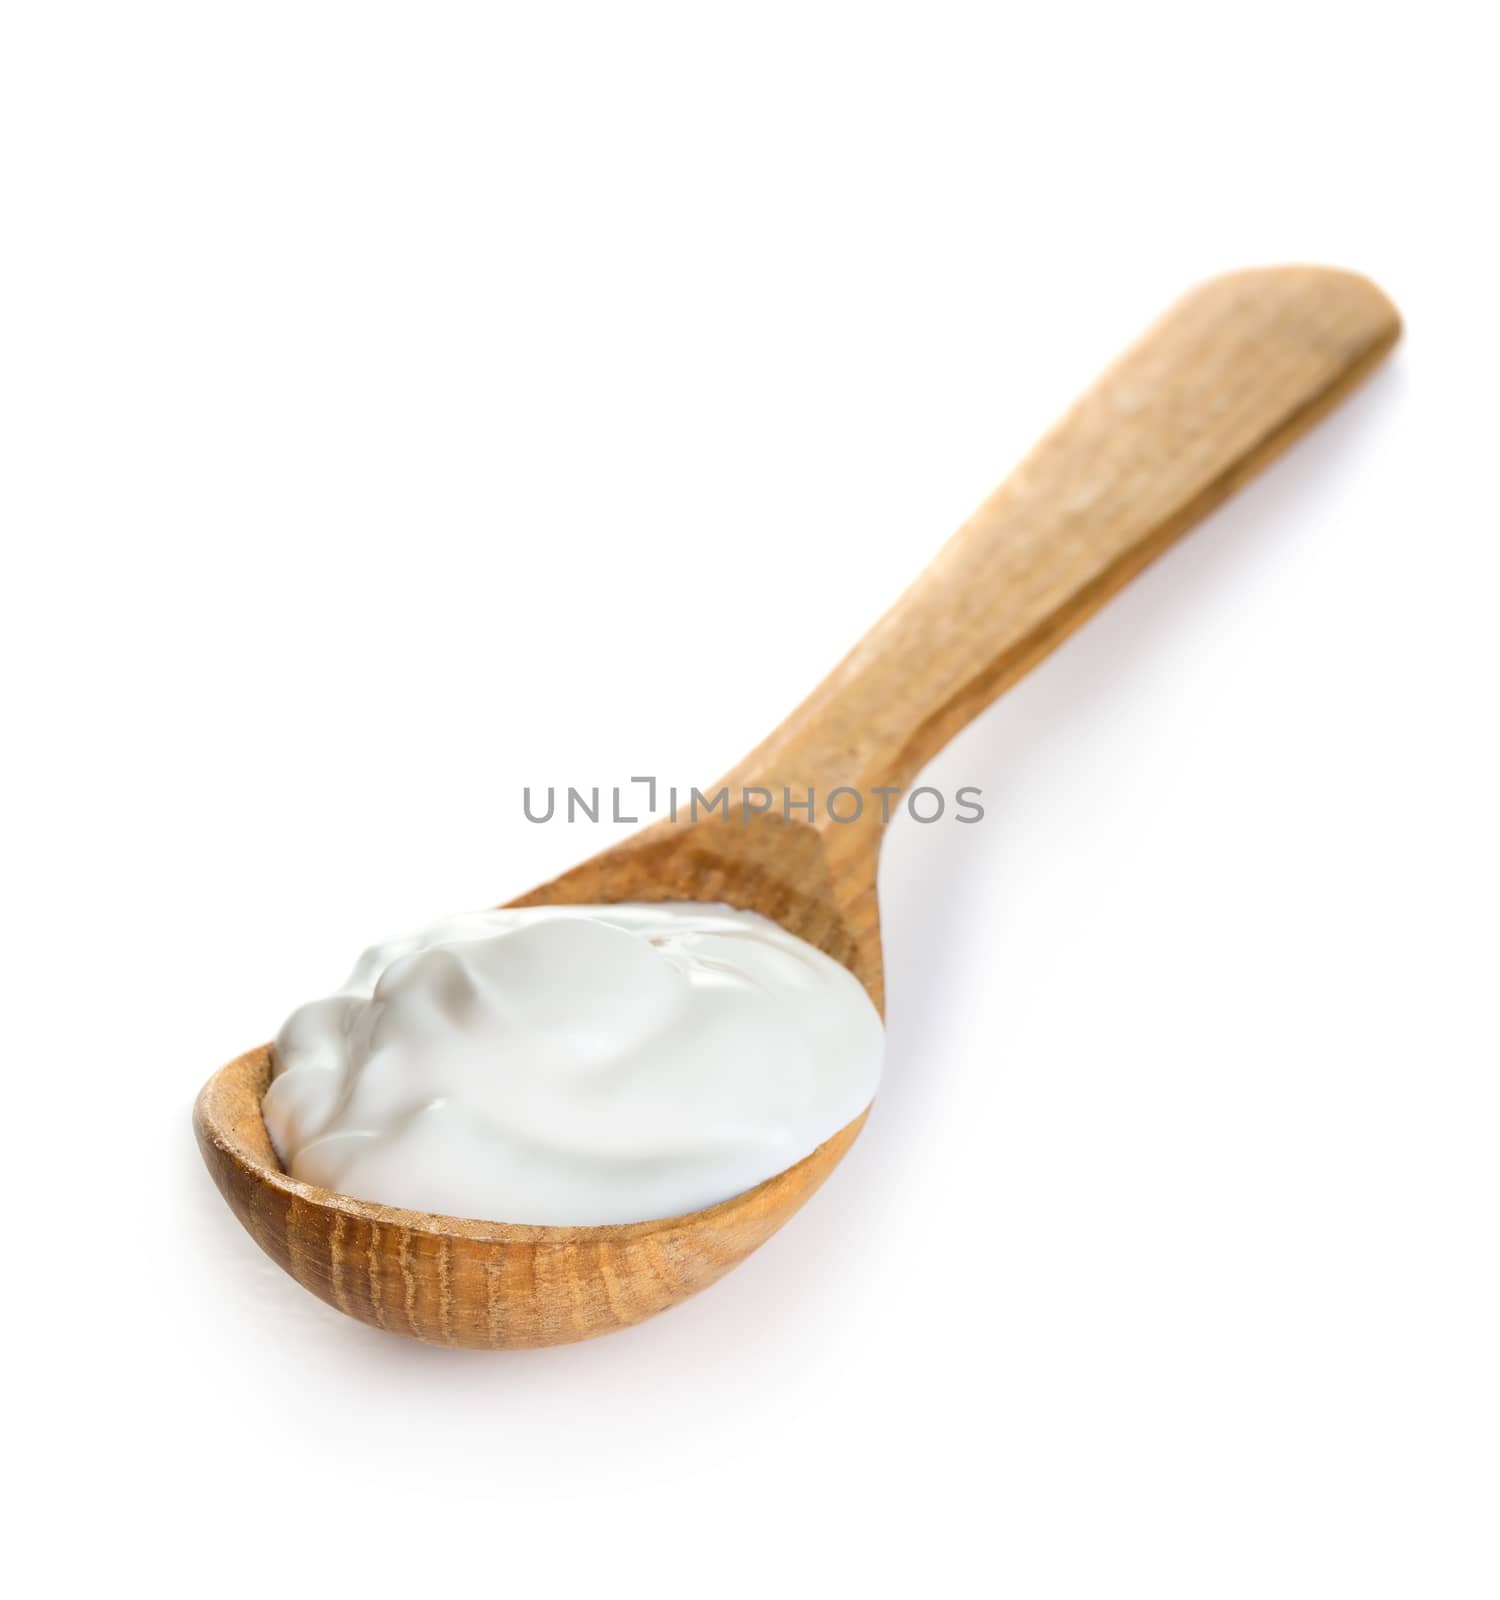 Cream in wooden spoon by Valengilda